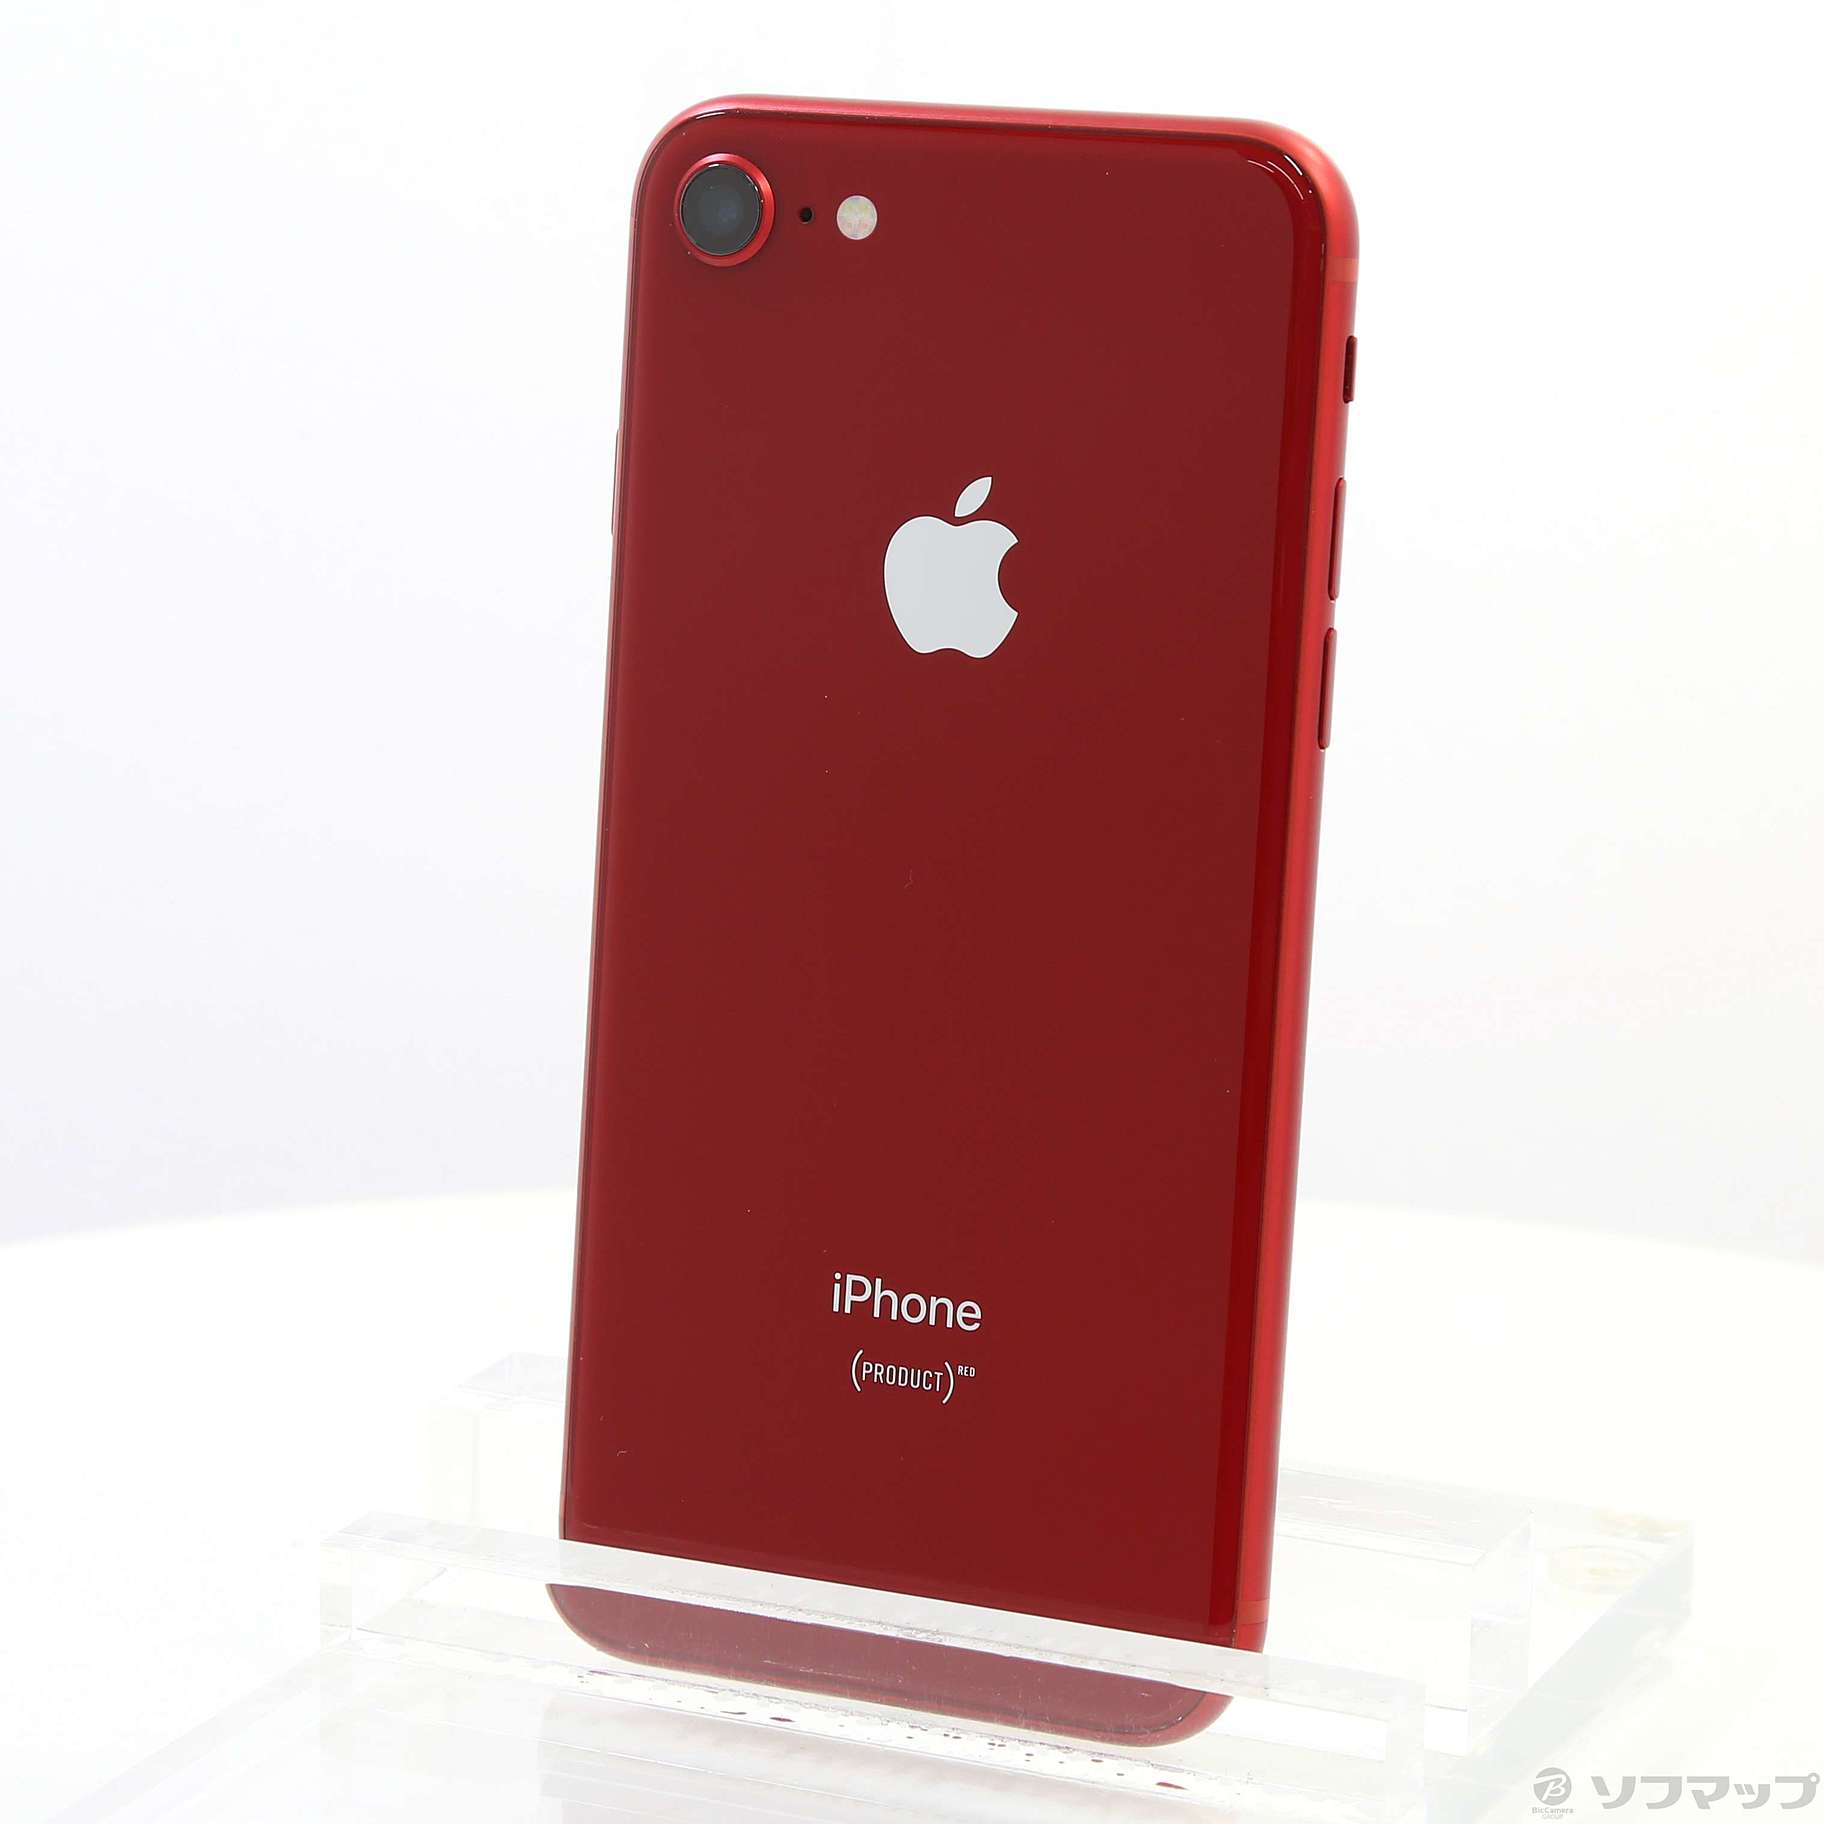 新品完全未開封 iPhone8 64GB docomo RED